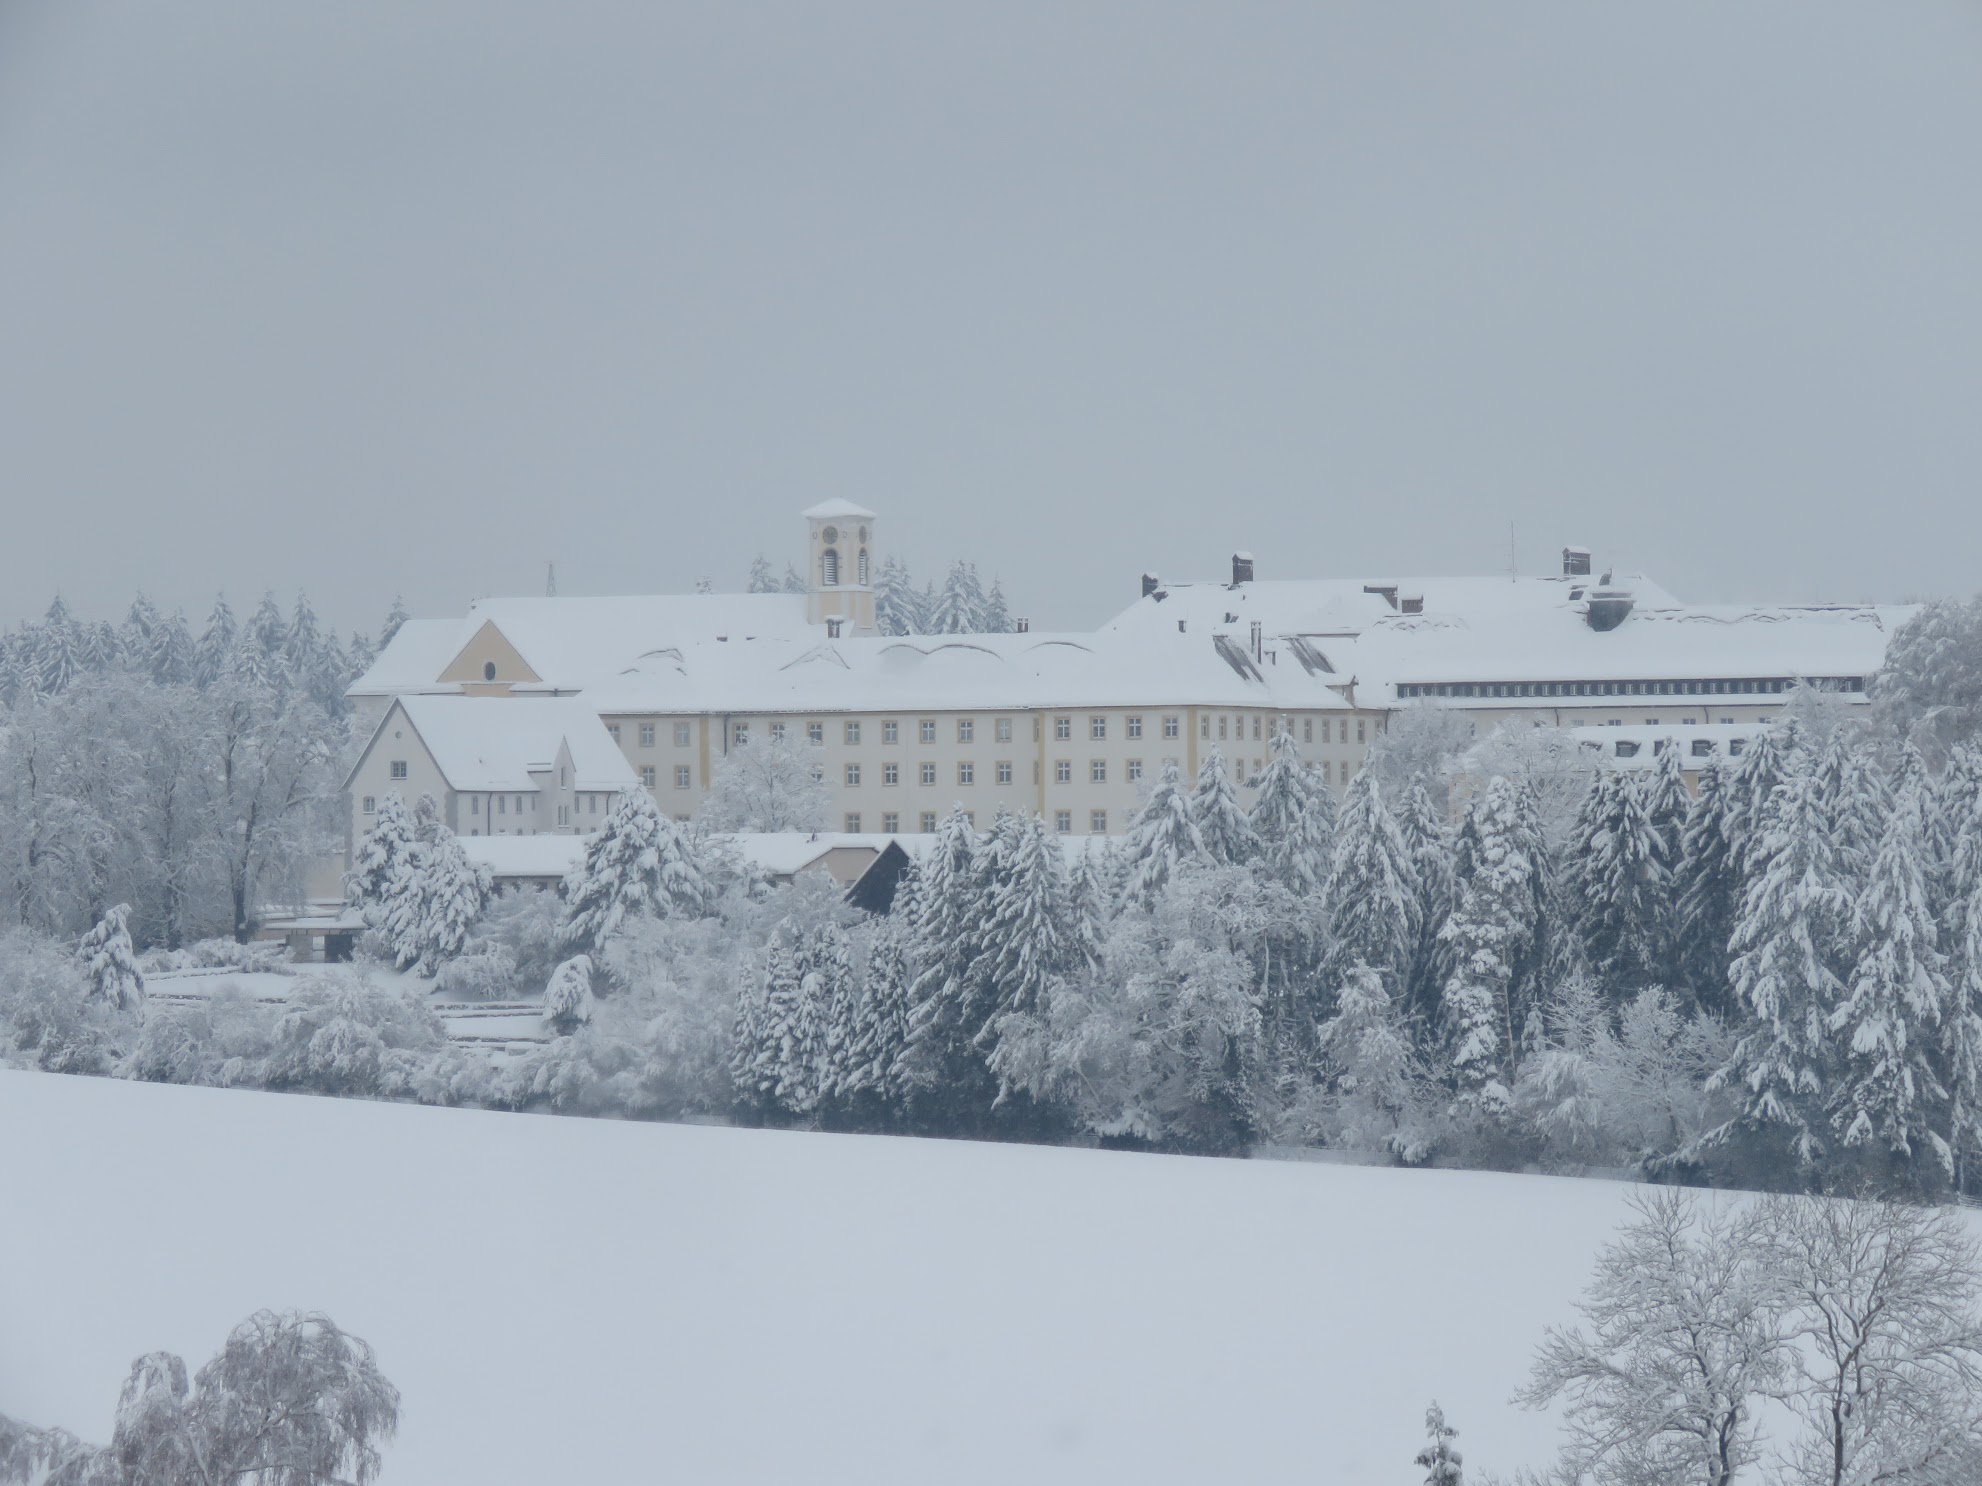 The Sießen monastery in the snow